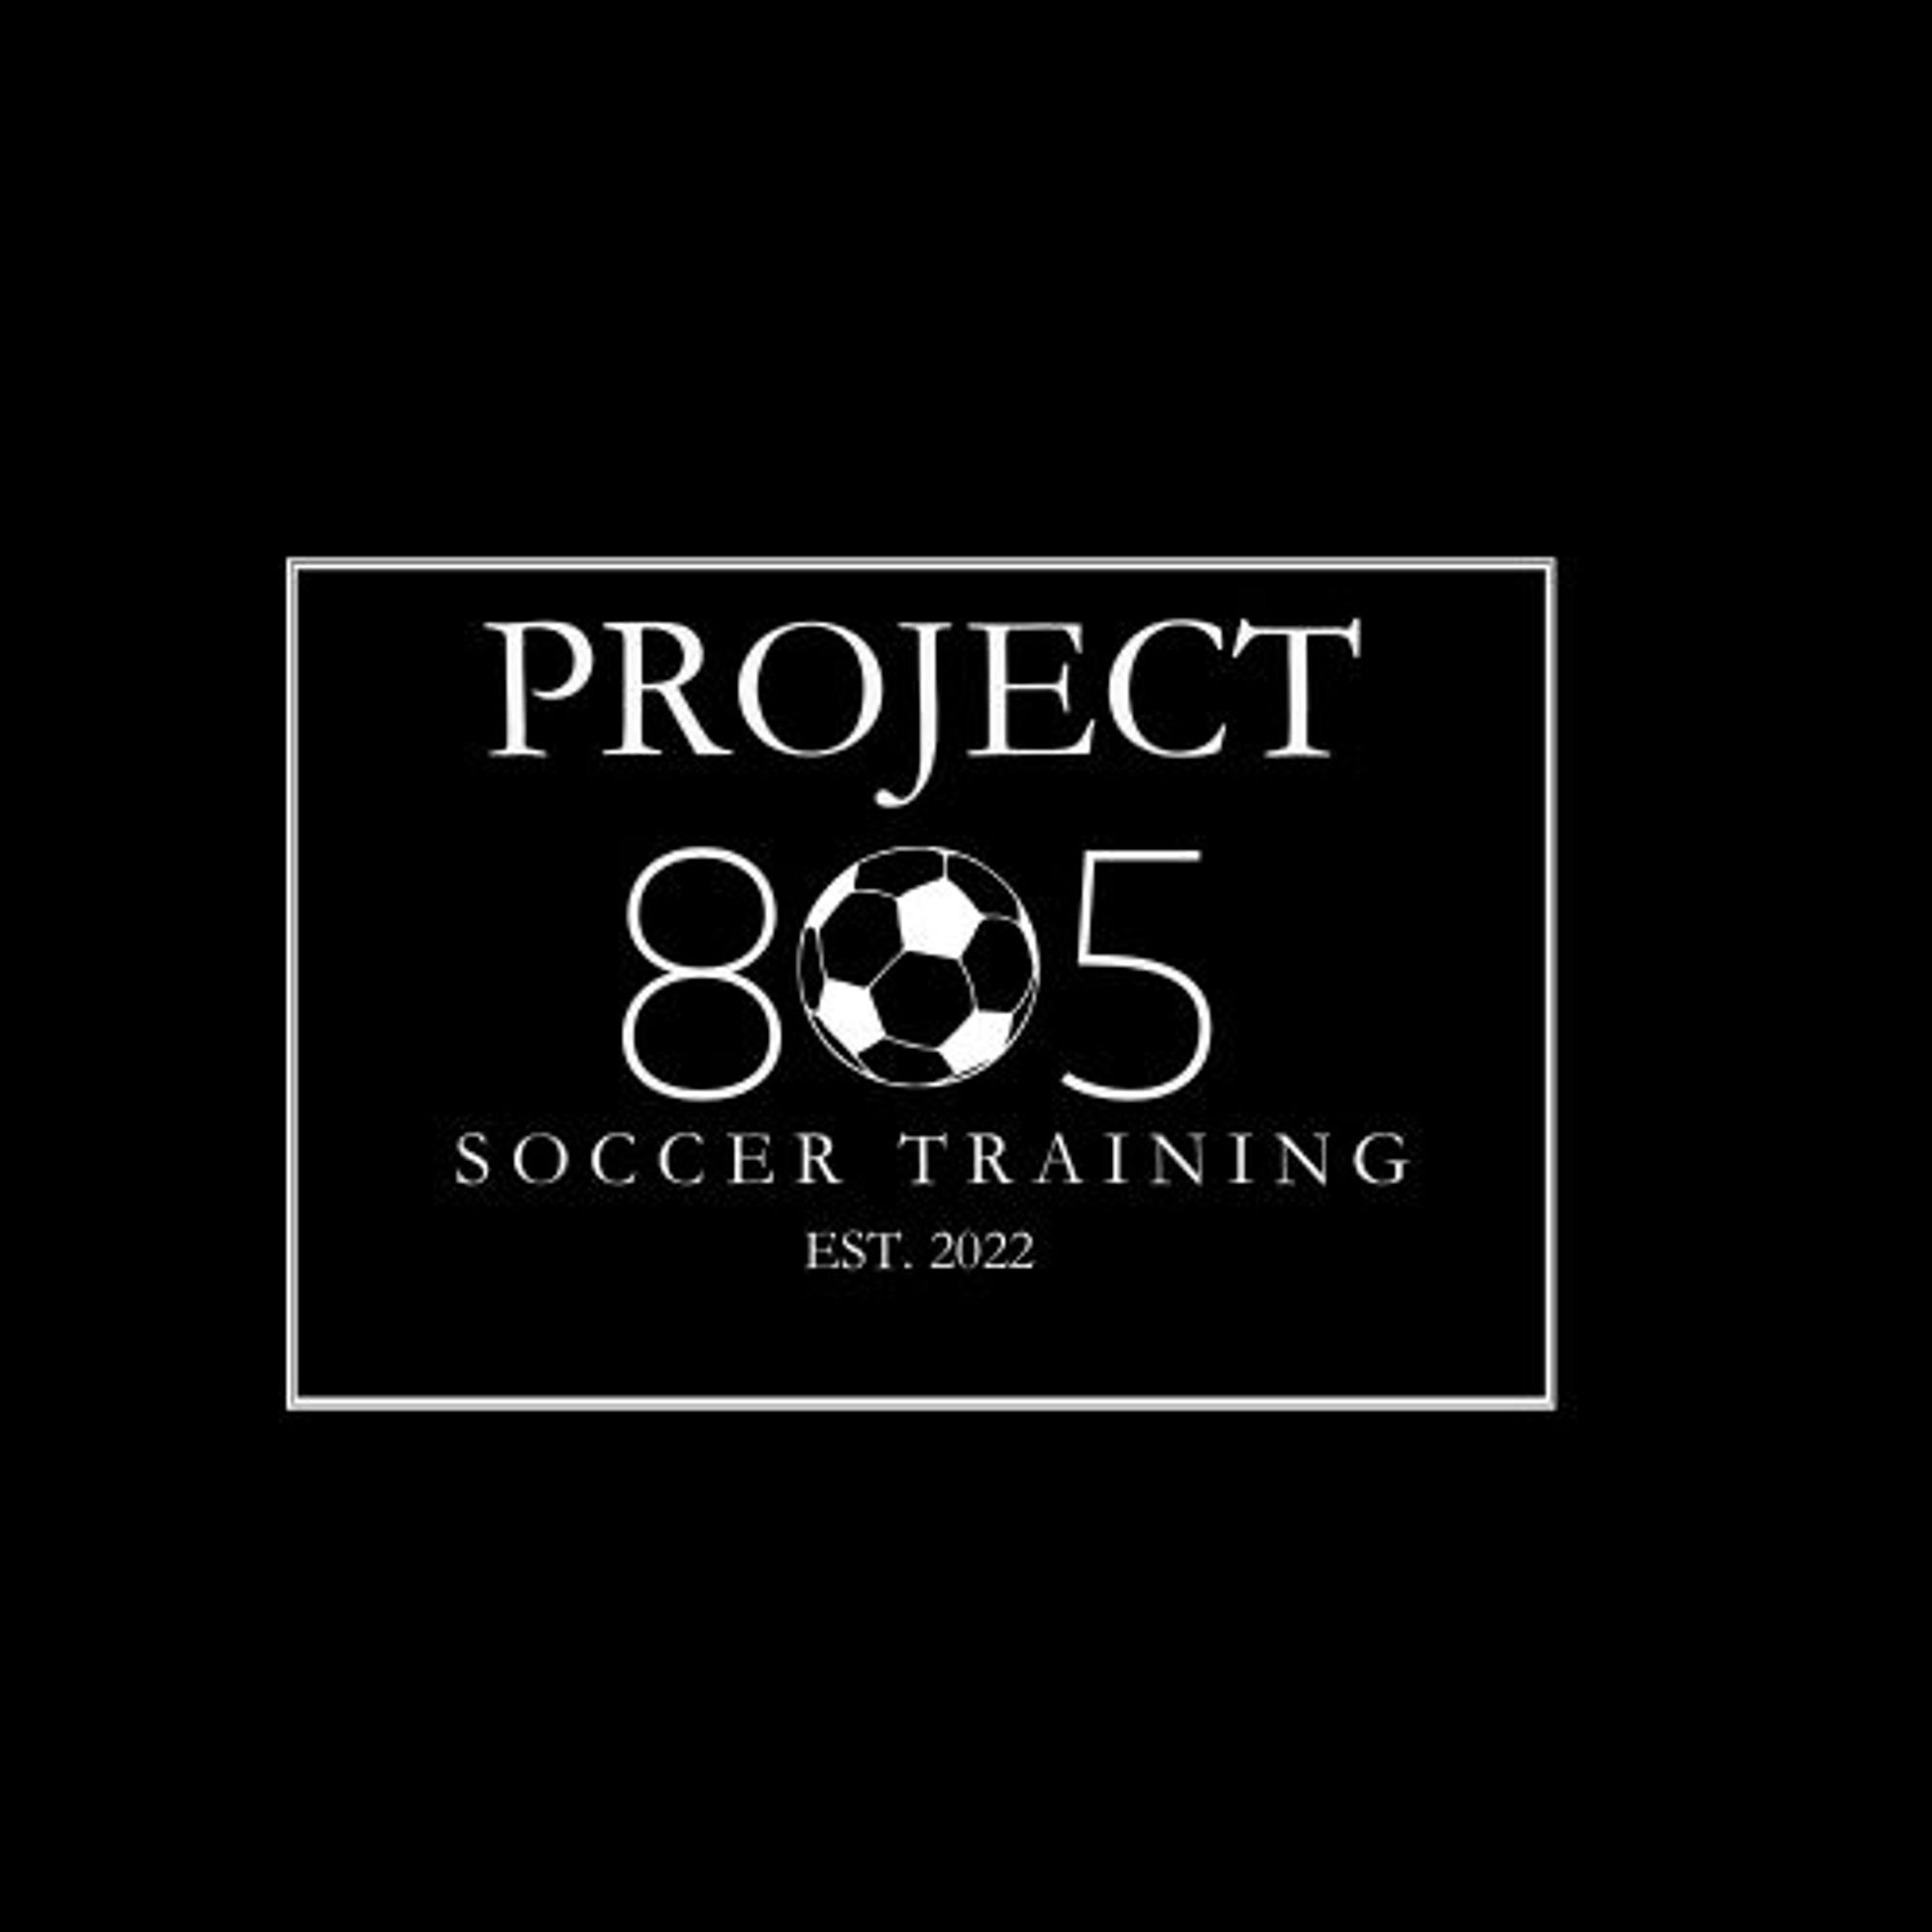 Project 805 Soccer Training | Admin Logo